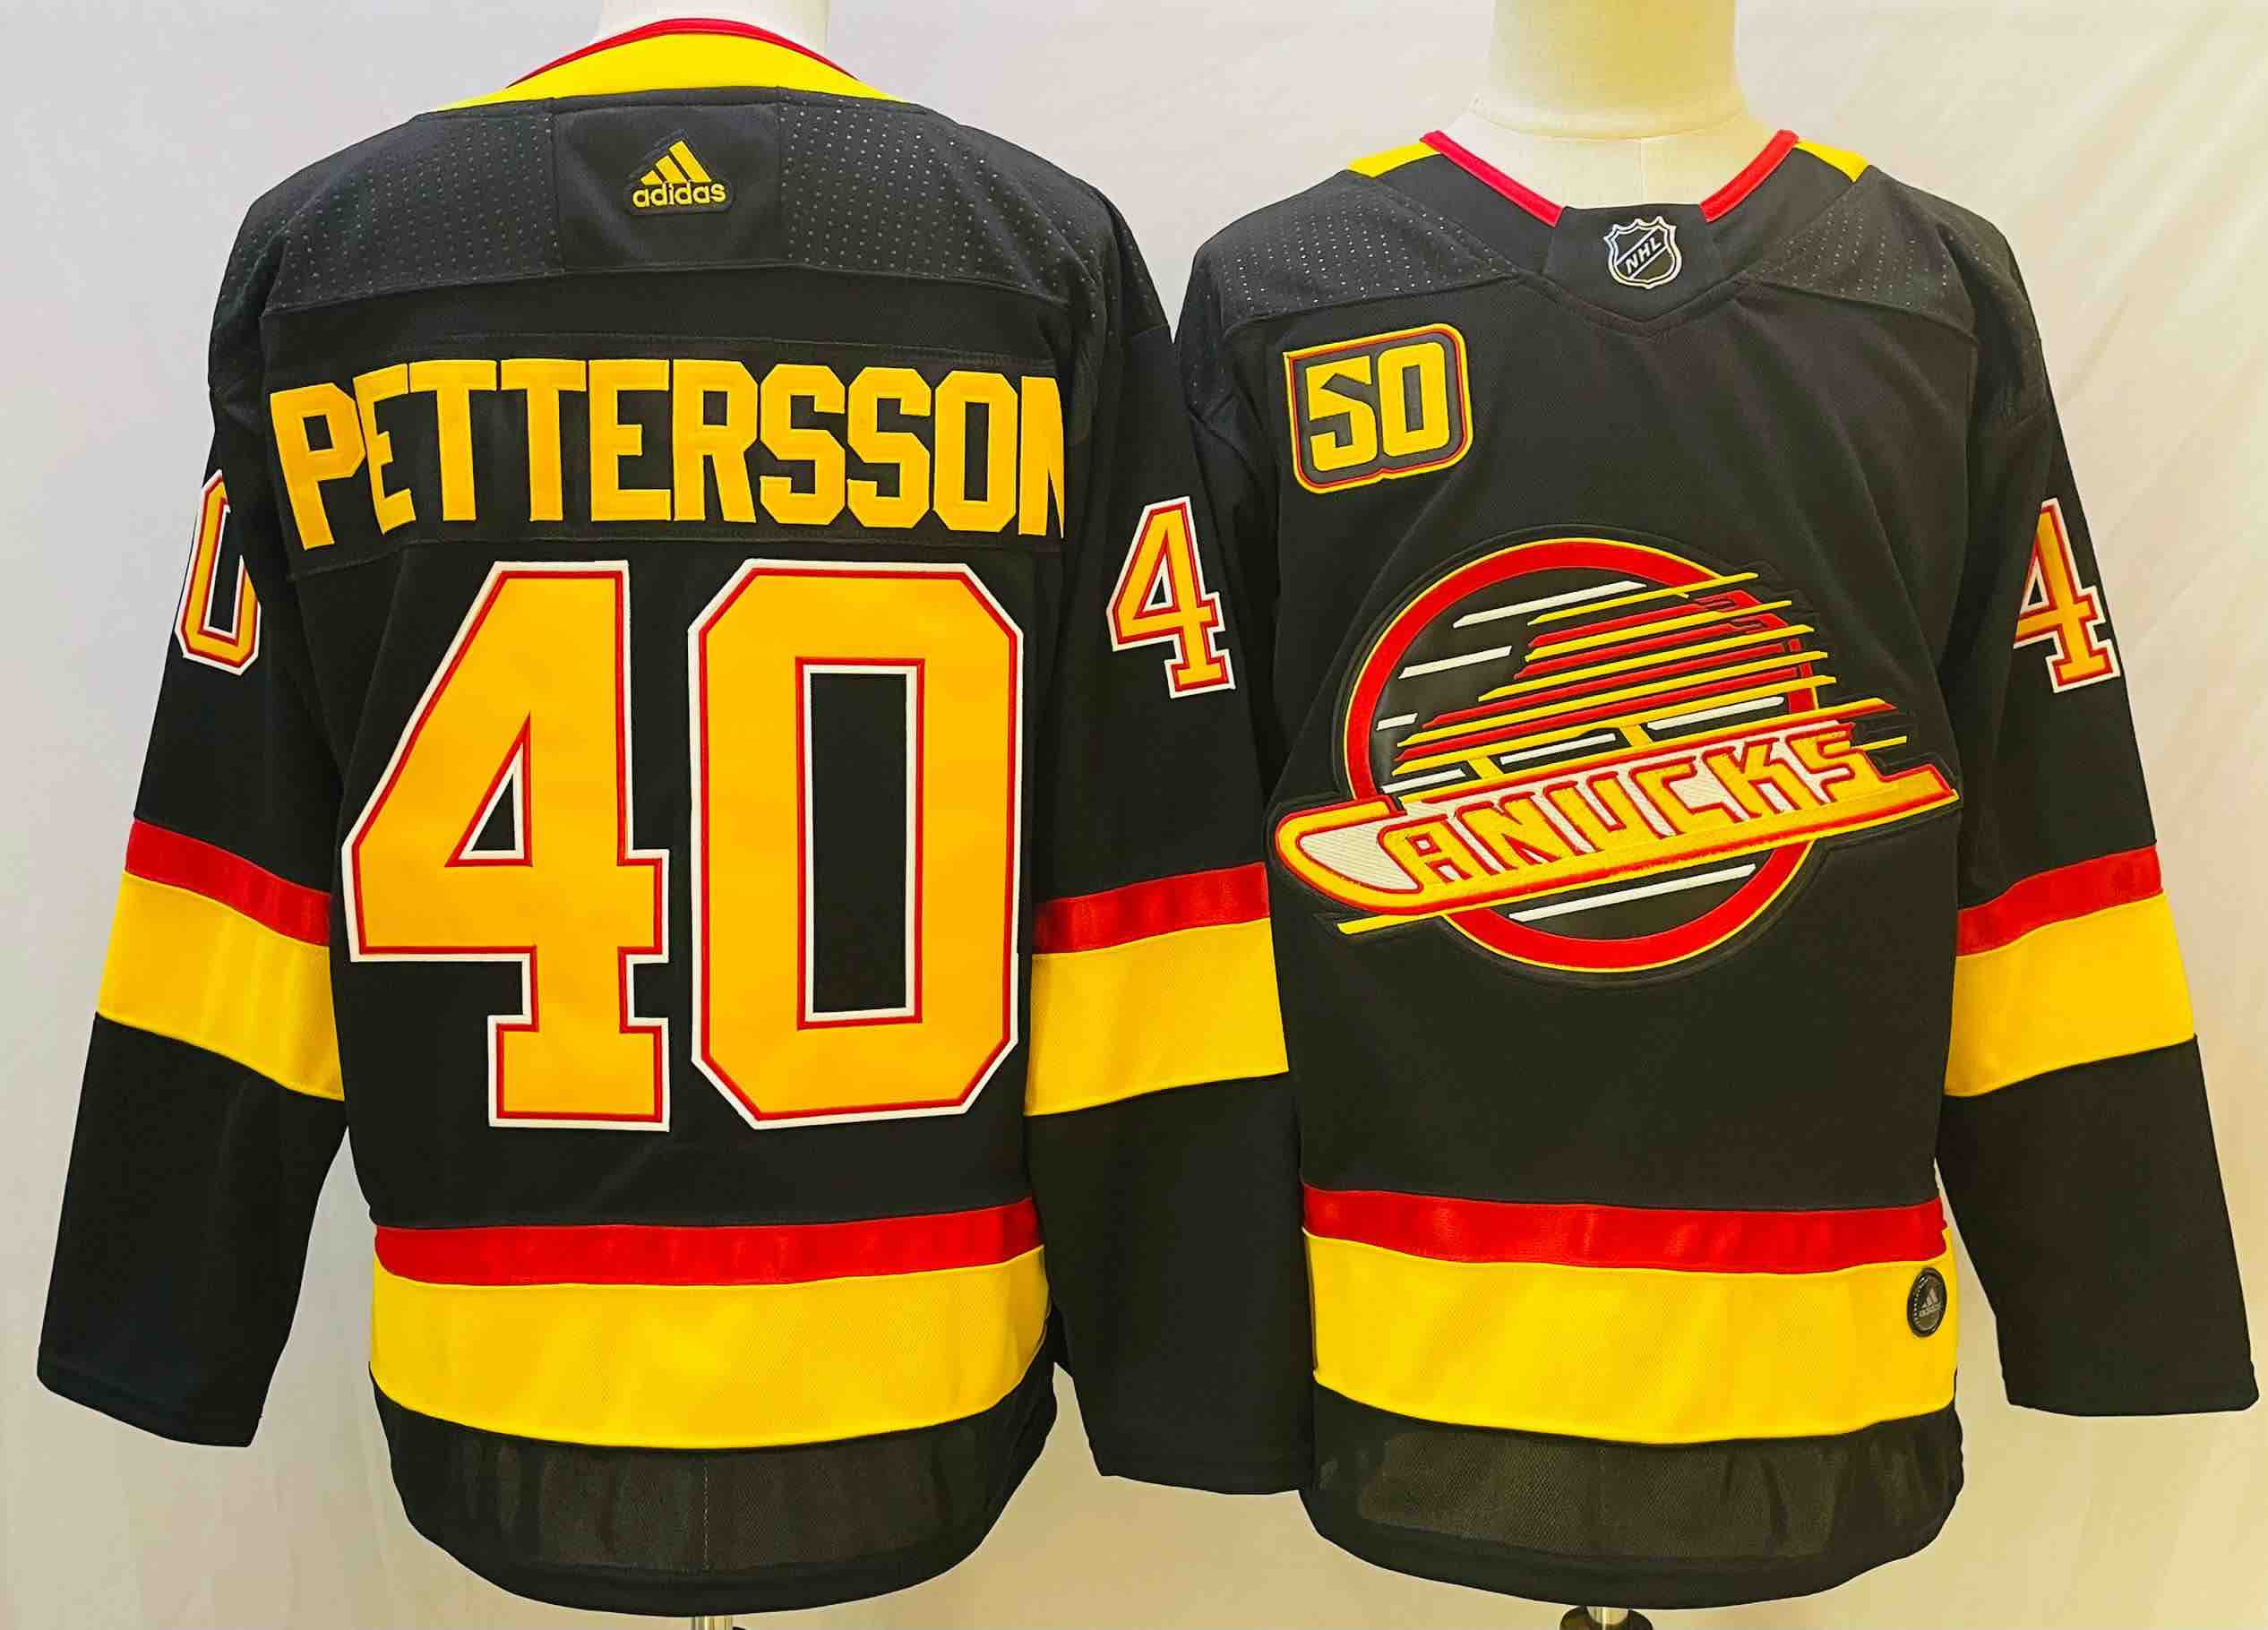 NHL Vancouver Canucks #40 Pettersson Black Jersey